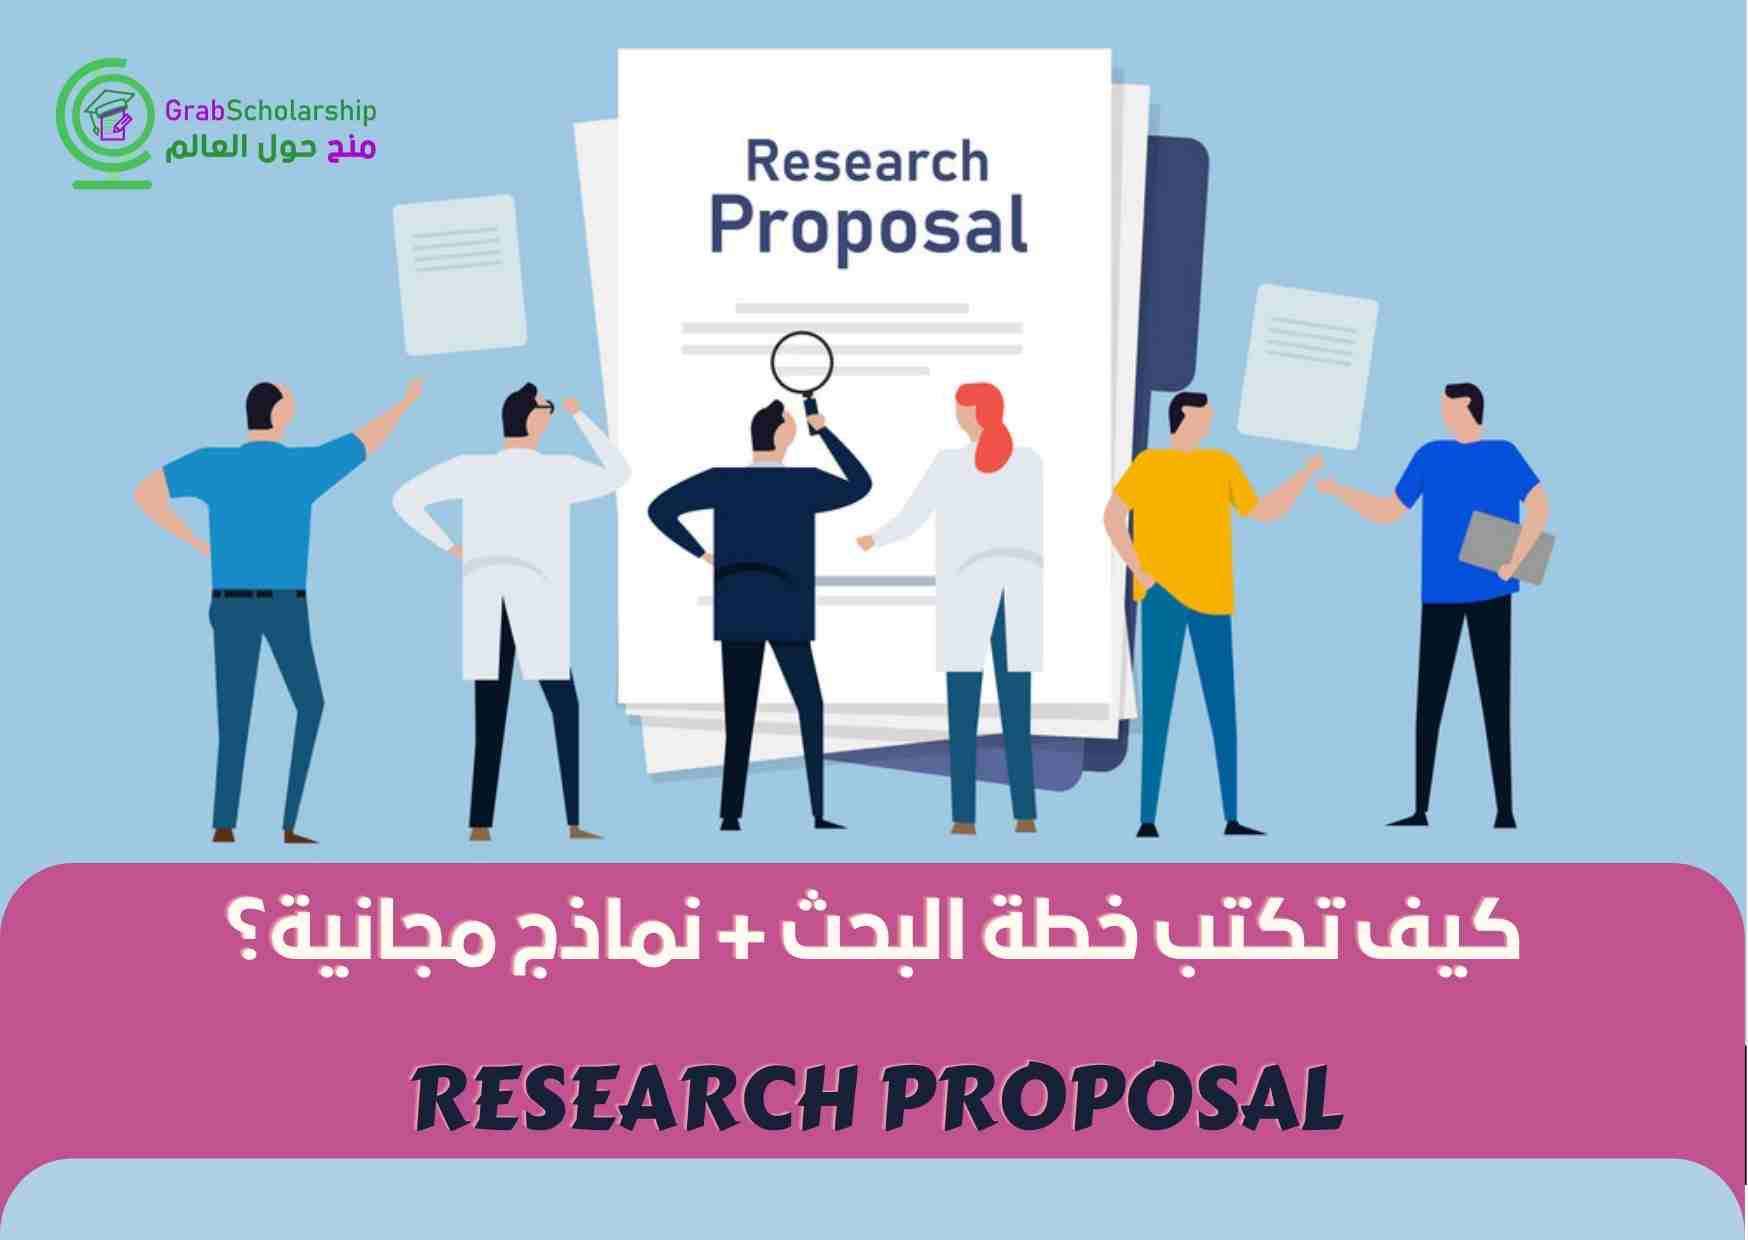 You are currently viewing كيف تكتب خطة البحث باحترافية + نماذج مجانية؟ Research Proposal